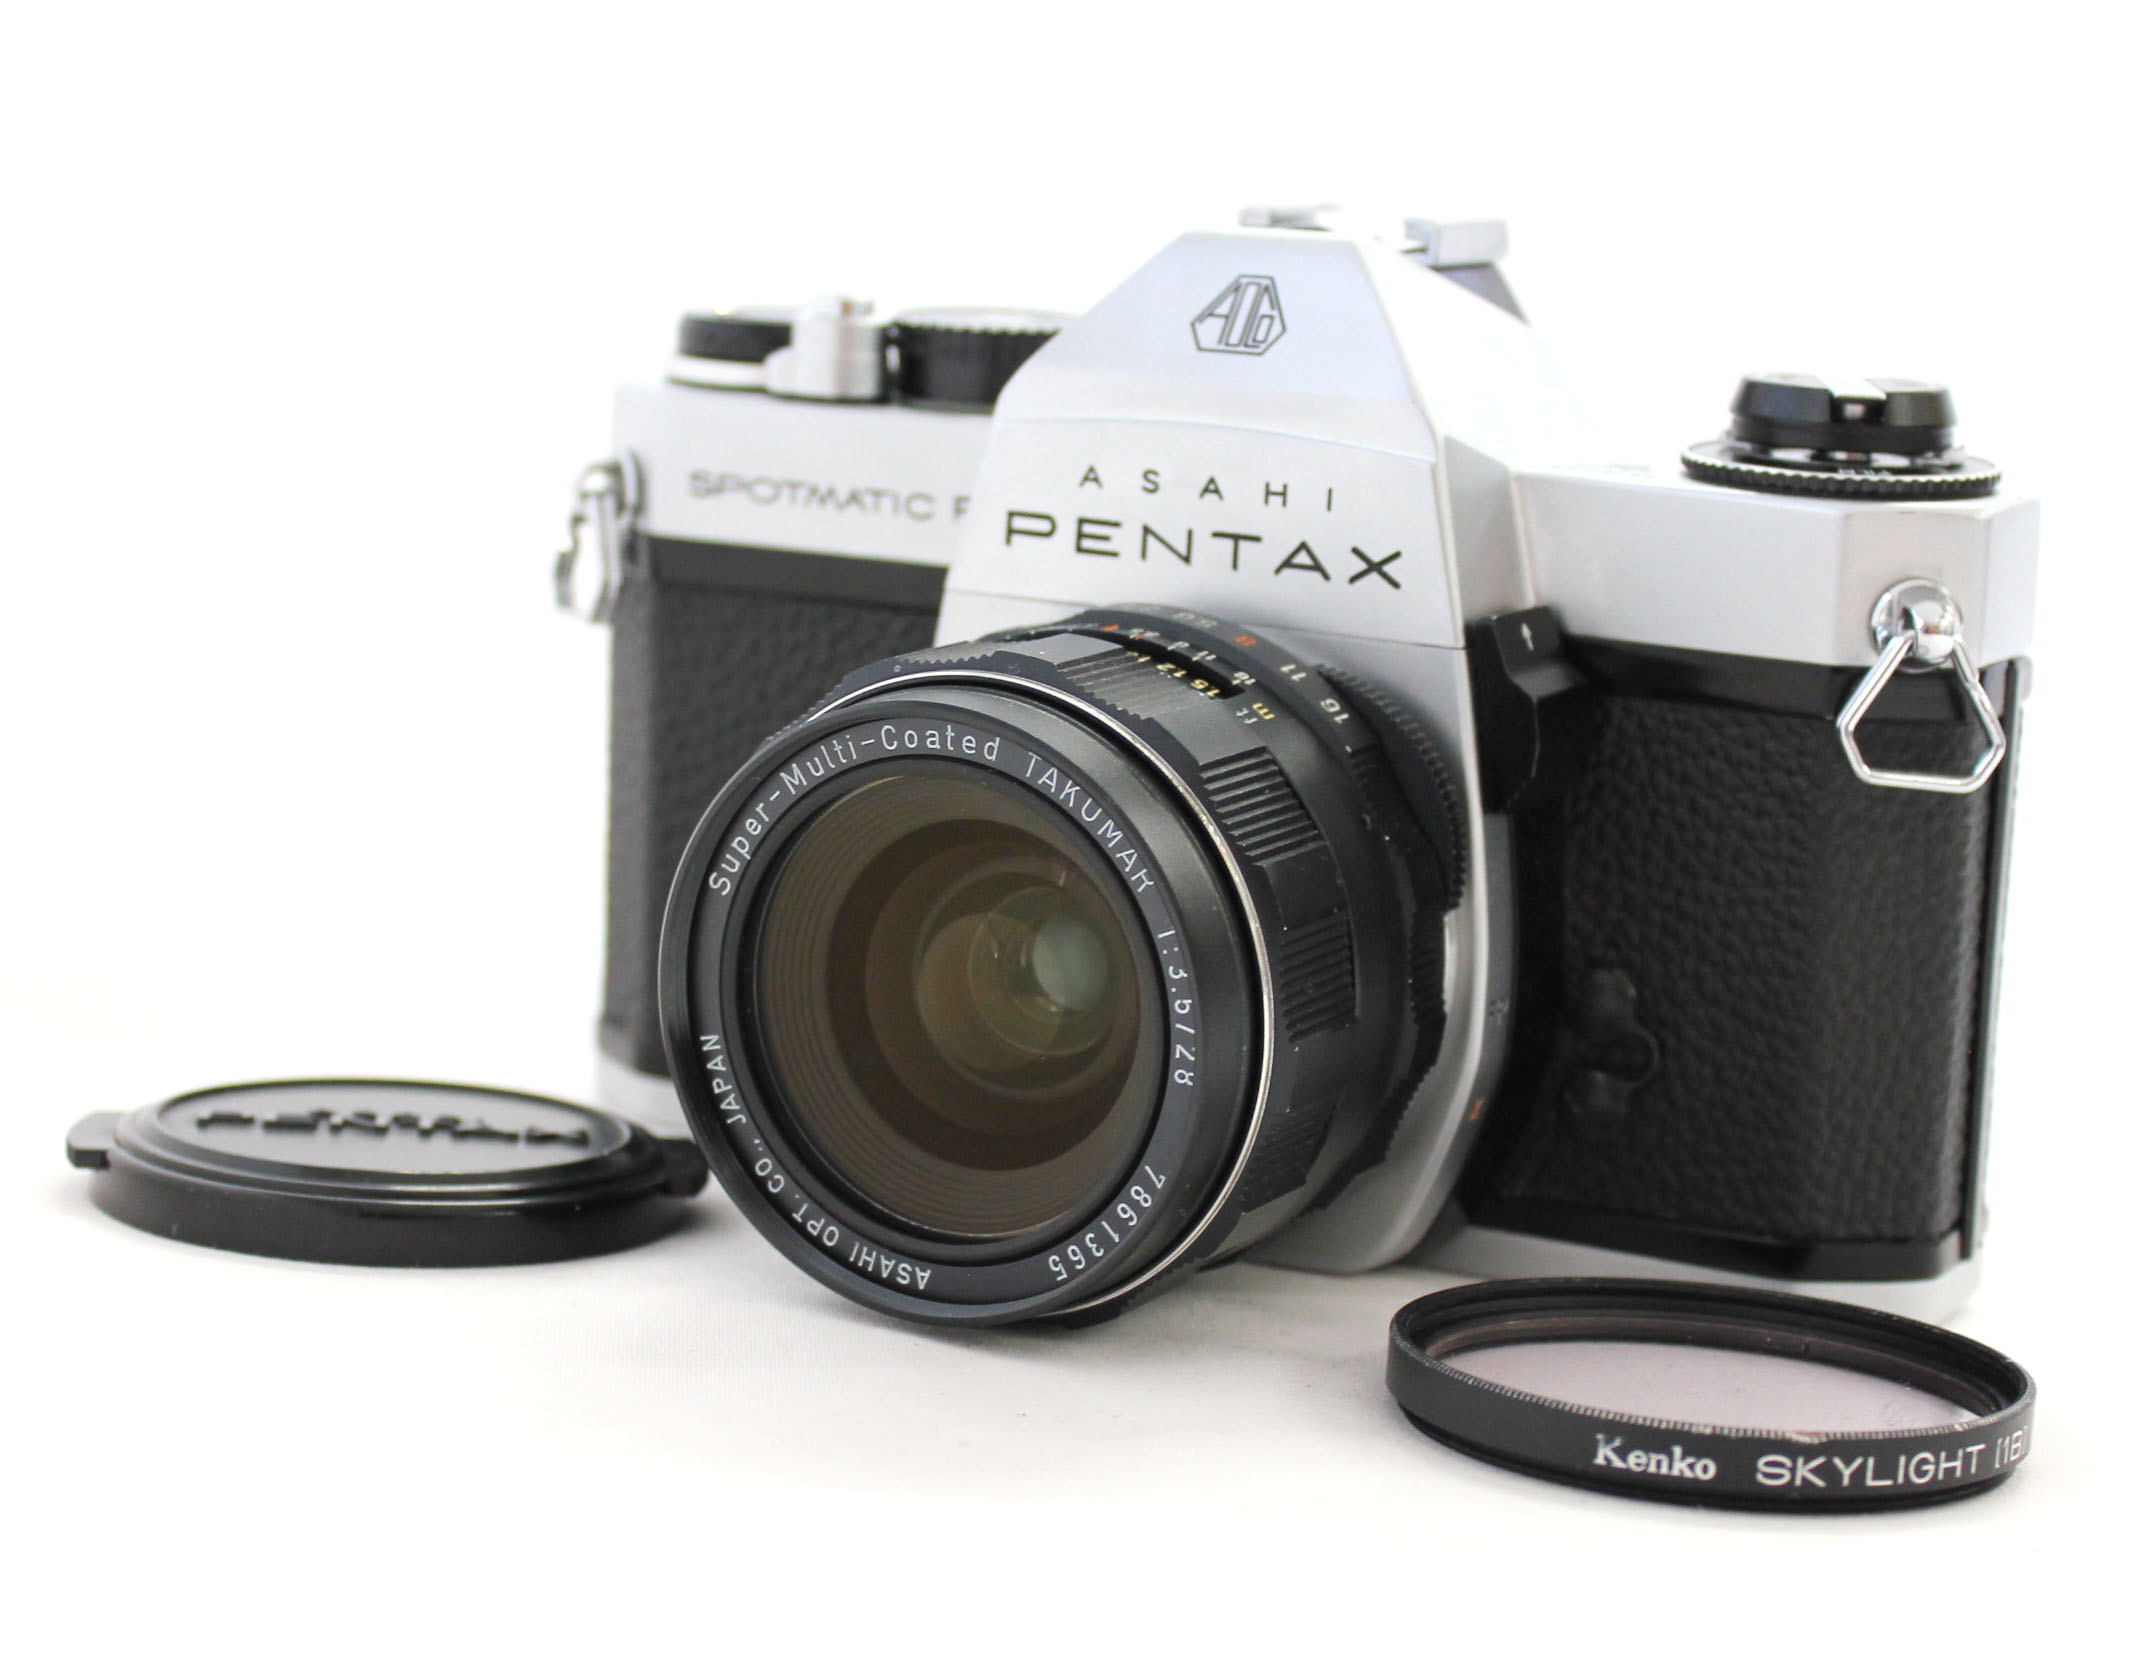 Japan Used Camera Shop | [Near Mint] Asahi Pentax Spotmatic F SPF 35mm SLR Camera w/ Super-Multi-Coated Takumar 28mm F/3.5 Lens from Japan